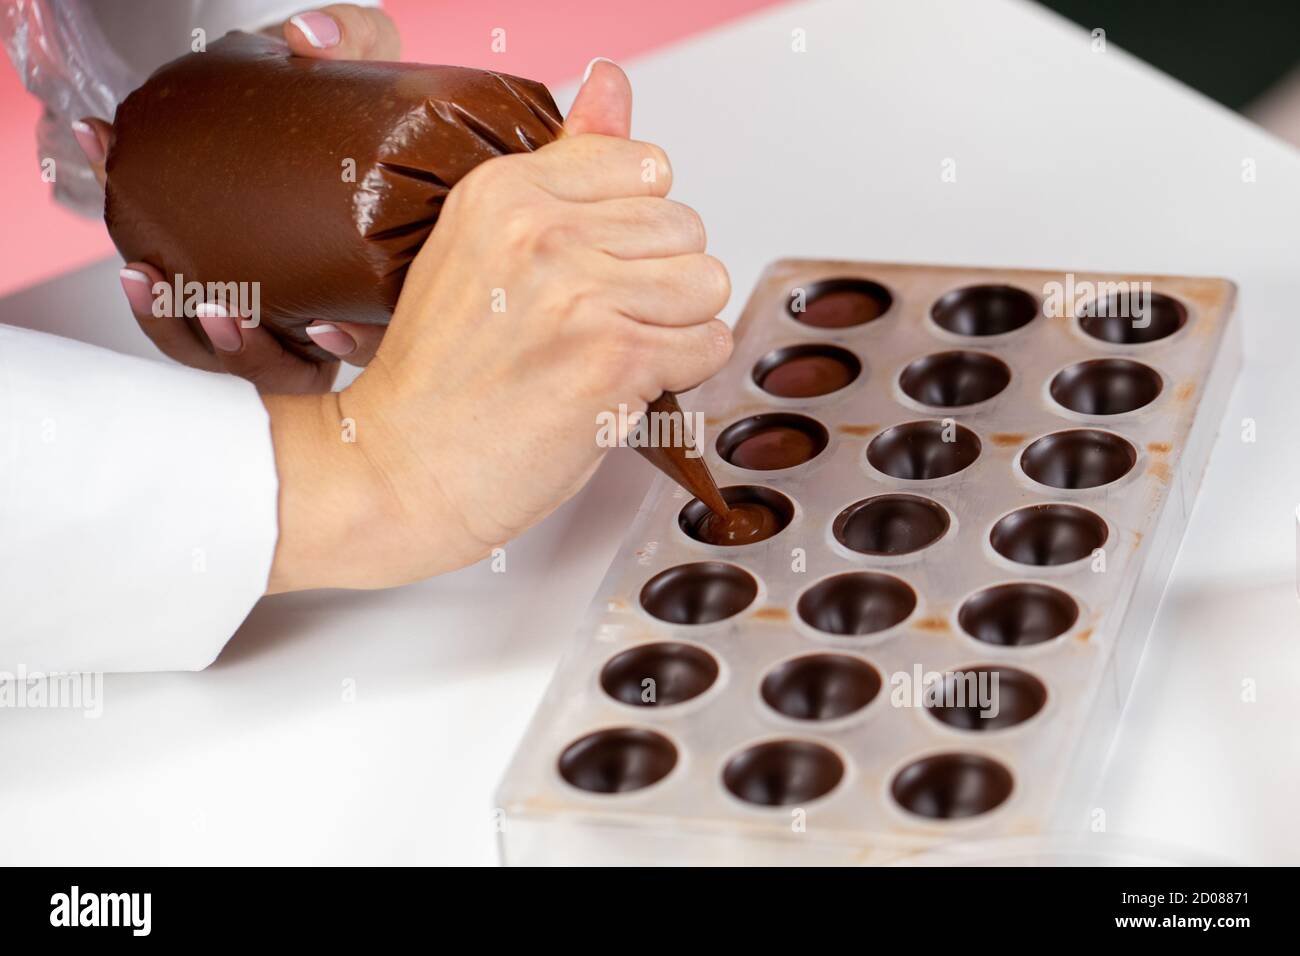 https://c8.alamy.com/comp/2D08871/chocolatier-pouring-caramel-filling-into-chocolate-mold-preparing-handmade-candy-2D08871.jpg